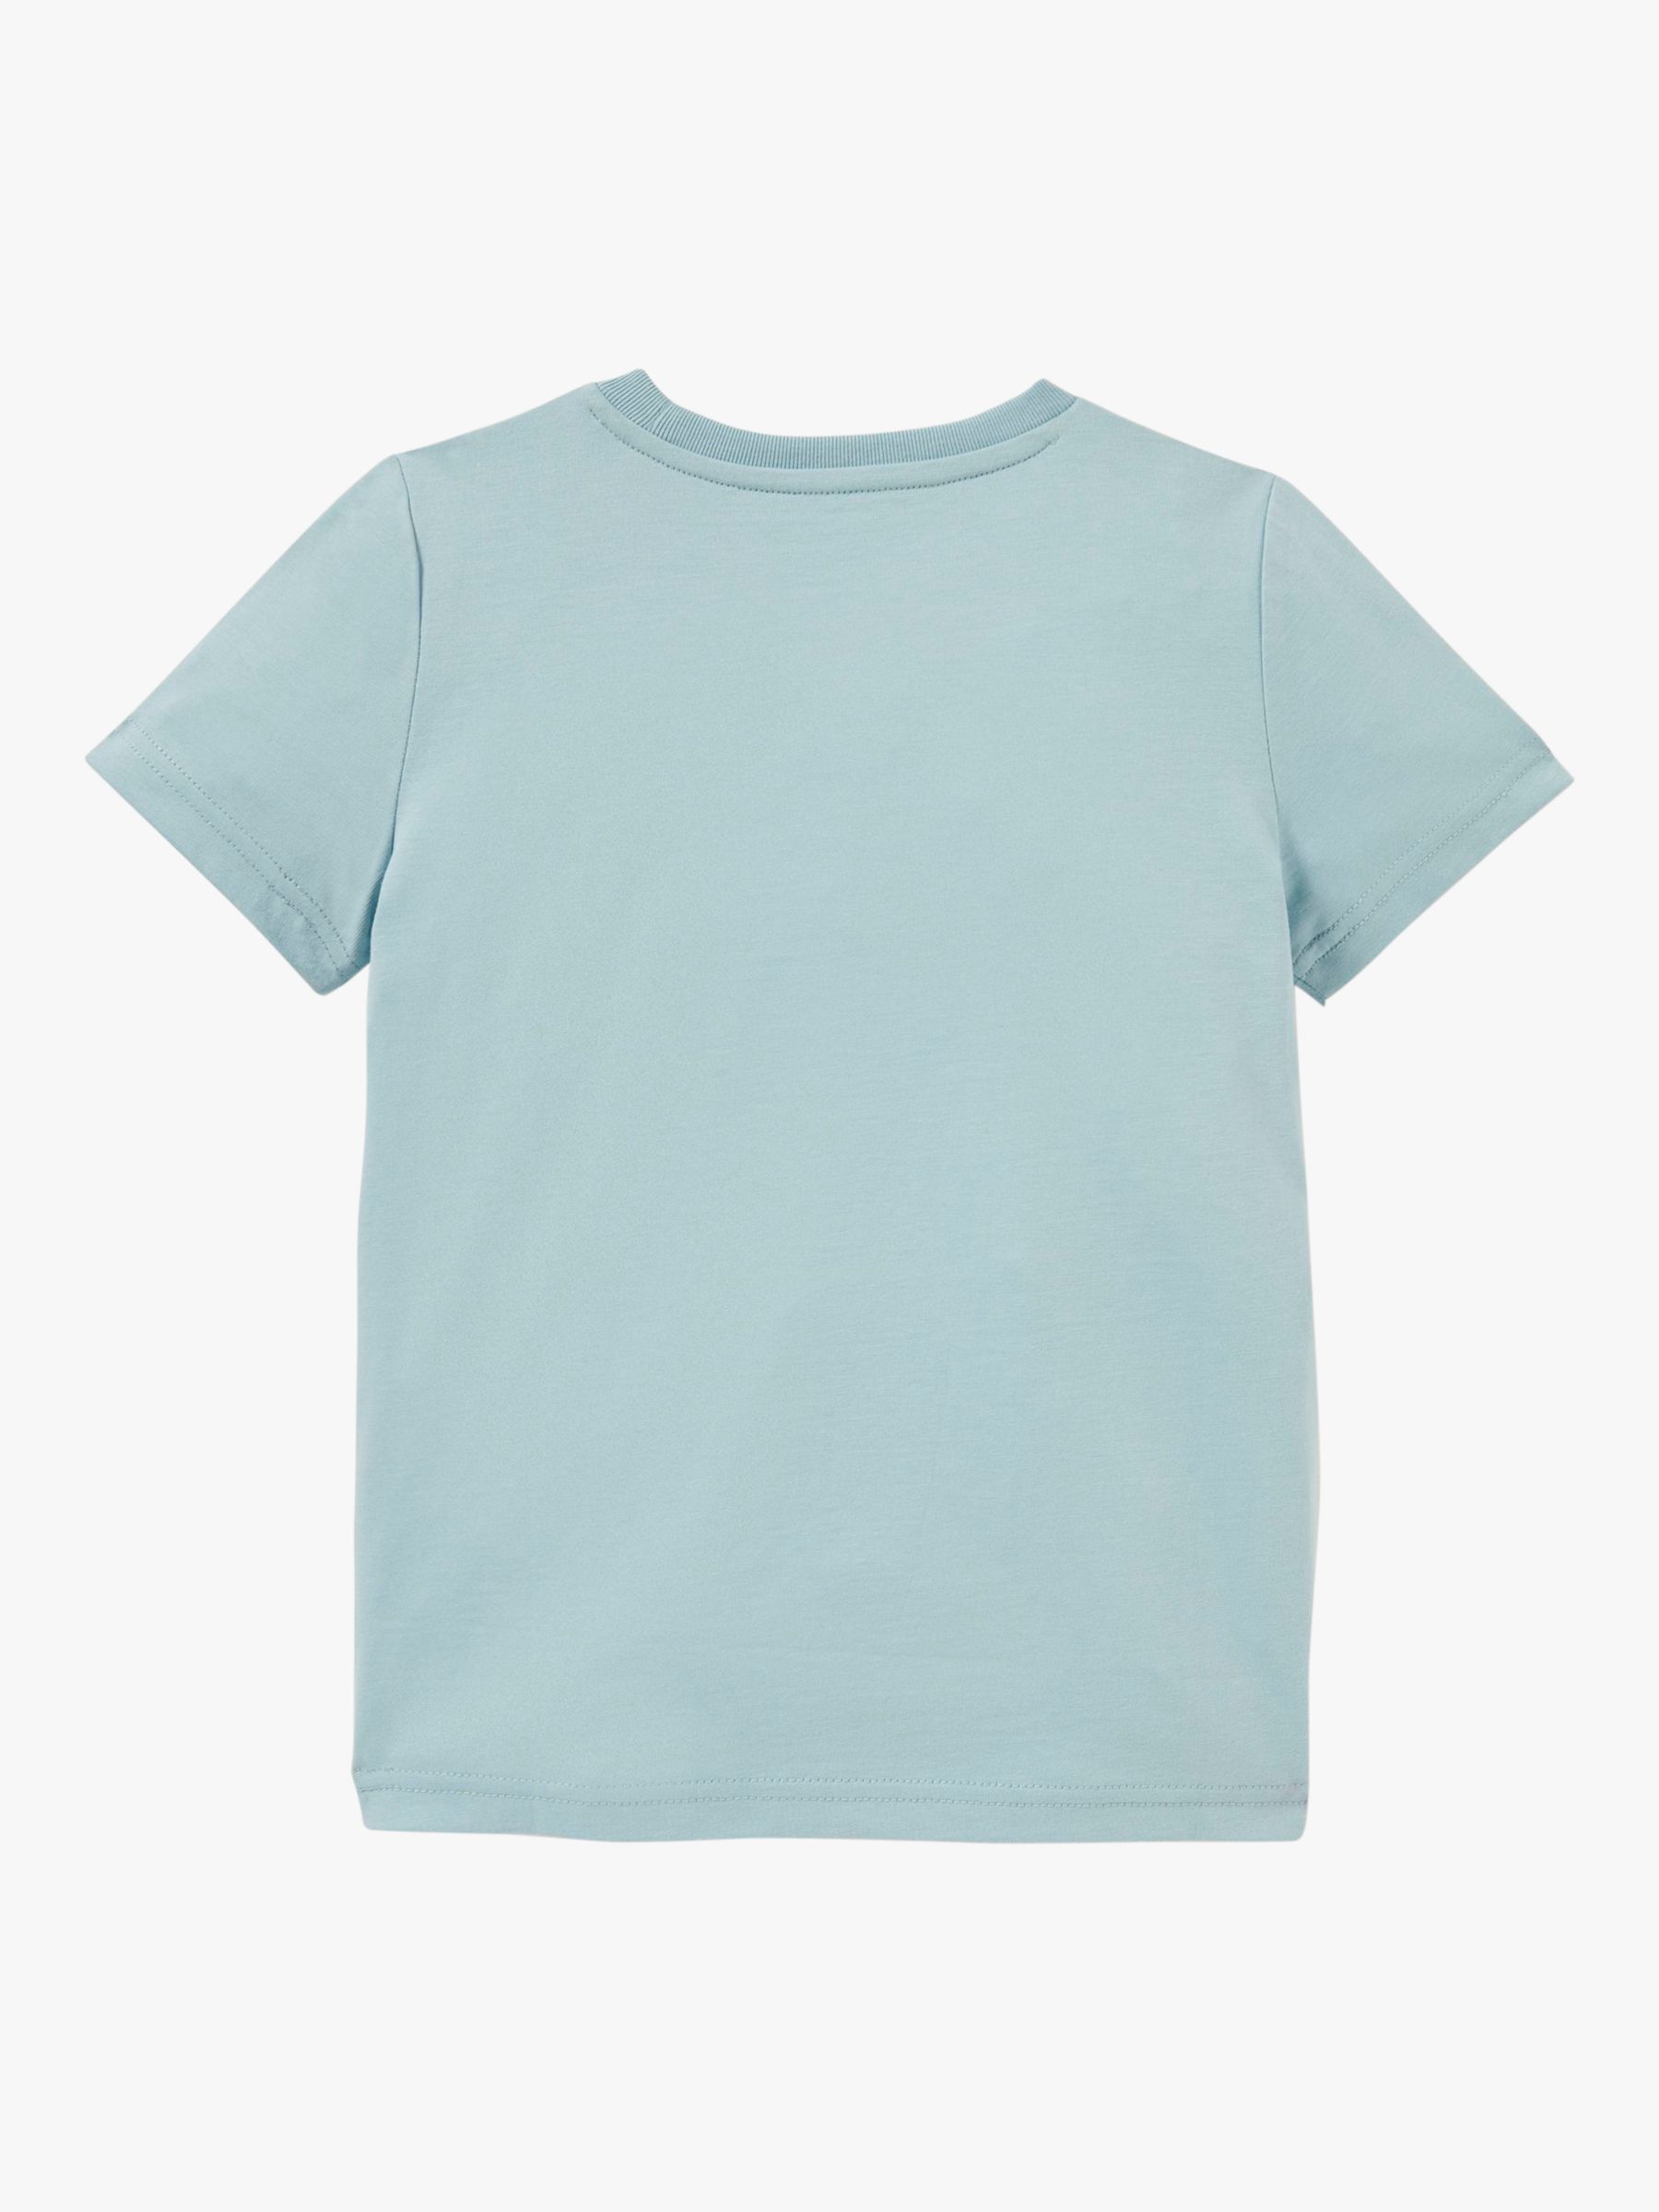 Mini Boden Kids' Ice Cream Planets Astronaut T-Shirt, Mineral Blue